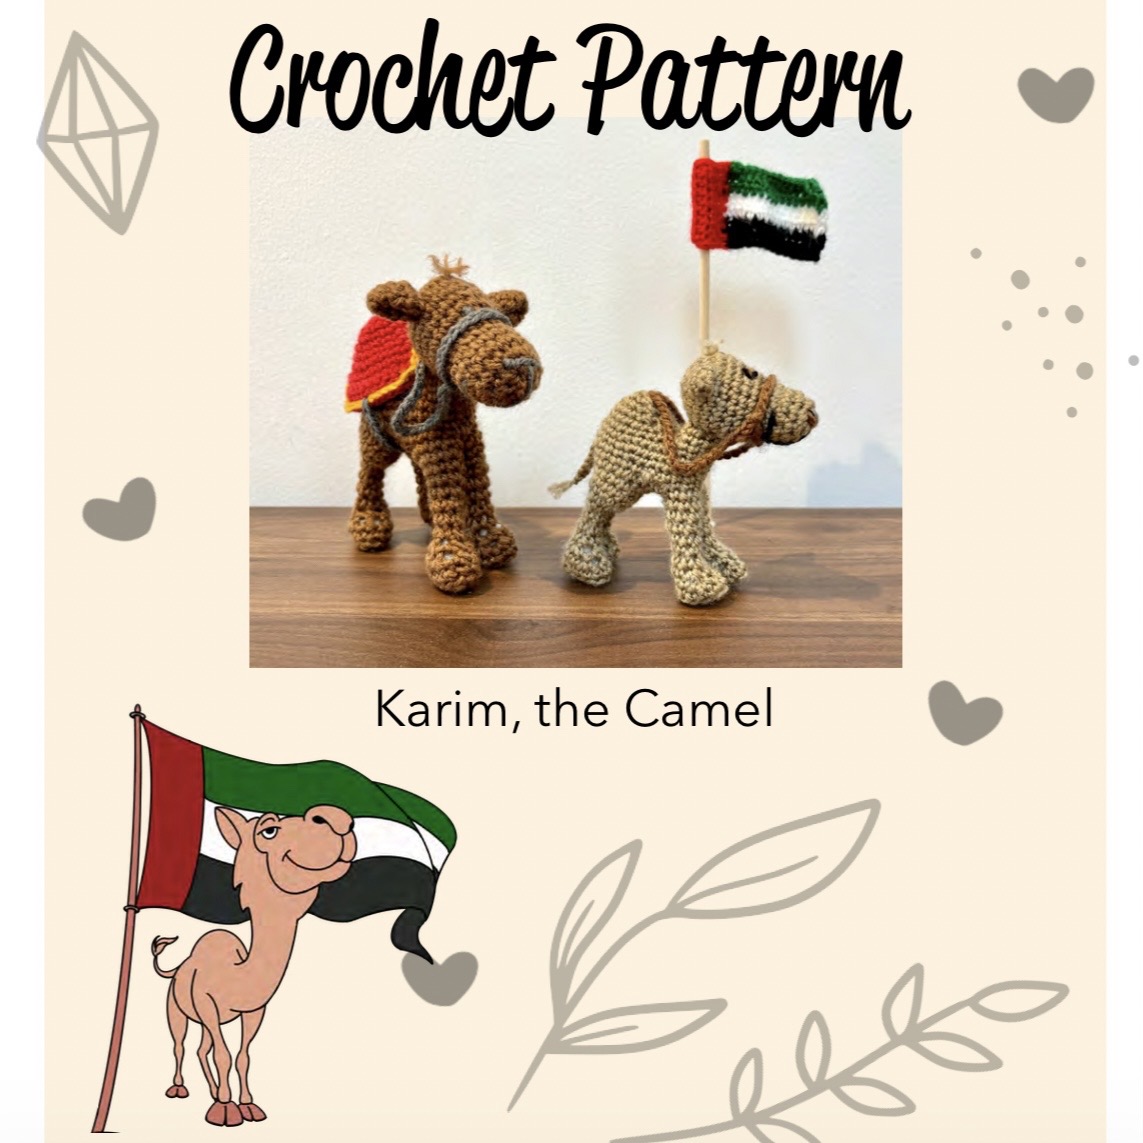 Create Your Own Camel 🐪 (etsy-shop link in bio) #CrochetCamel
#AmigurumiMagic
#CrochetPattern
#YarnLove
#HandmadeHappiness
#CrochetCreativity
#CrochetAddicts
#AmigurumiToys
#CraftyHands
#YarnCraft
#DIYCraft
#CrochetLife
#CraftersOfInstagram
#StitchCraft
#furryflinn